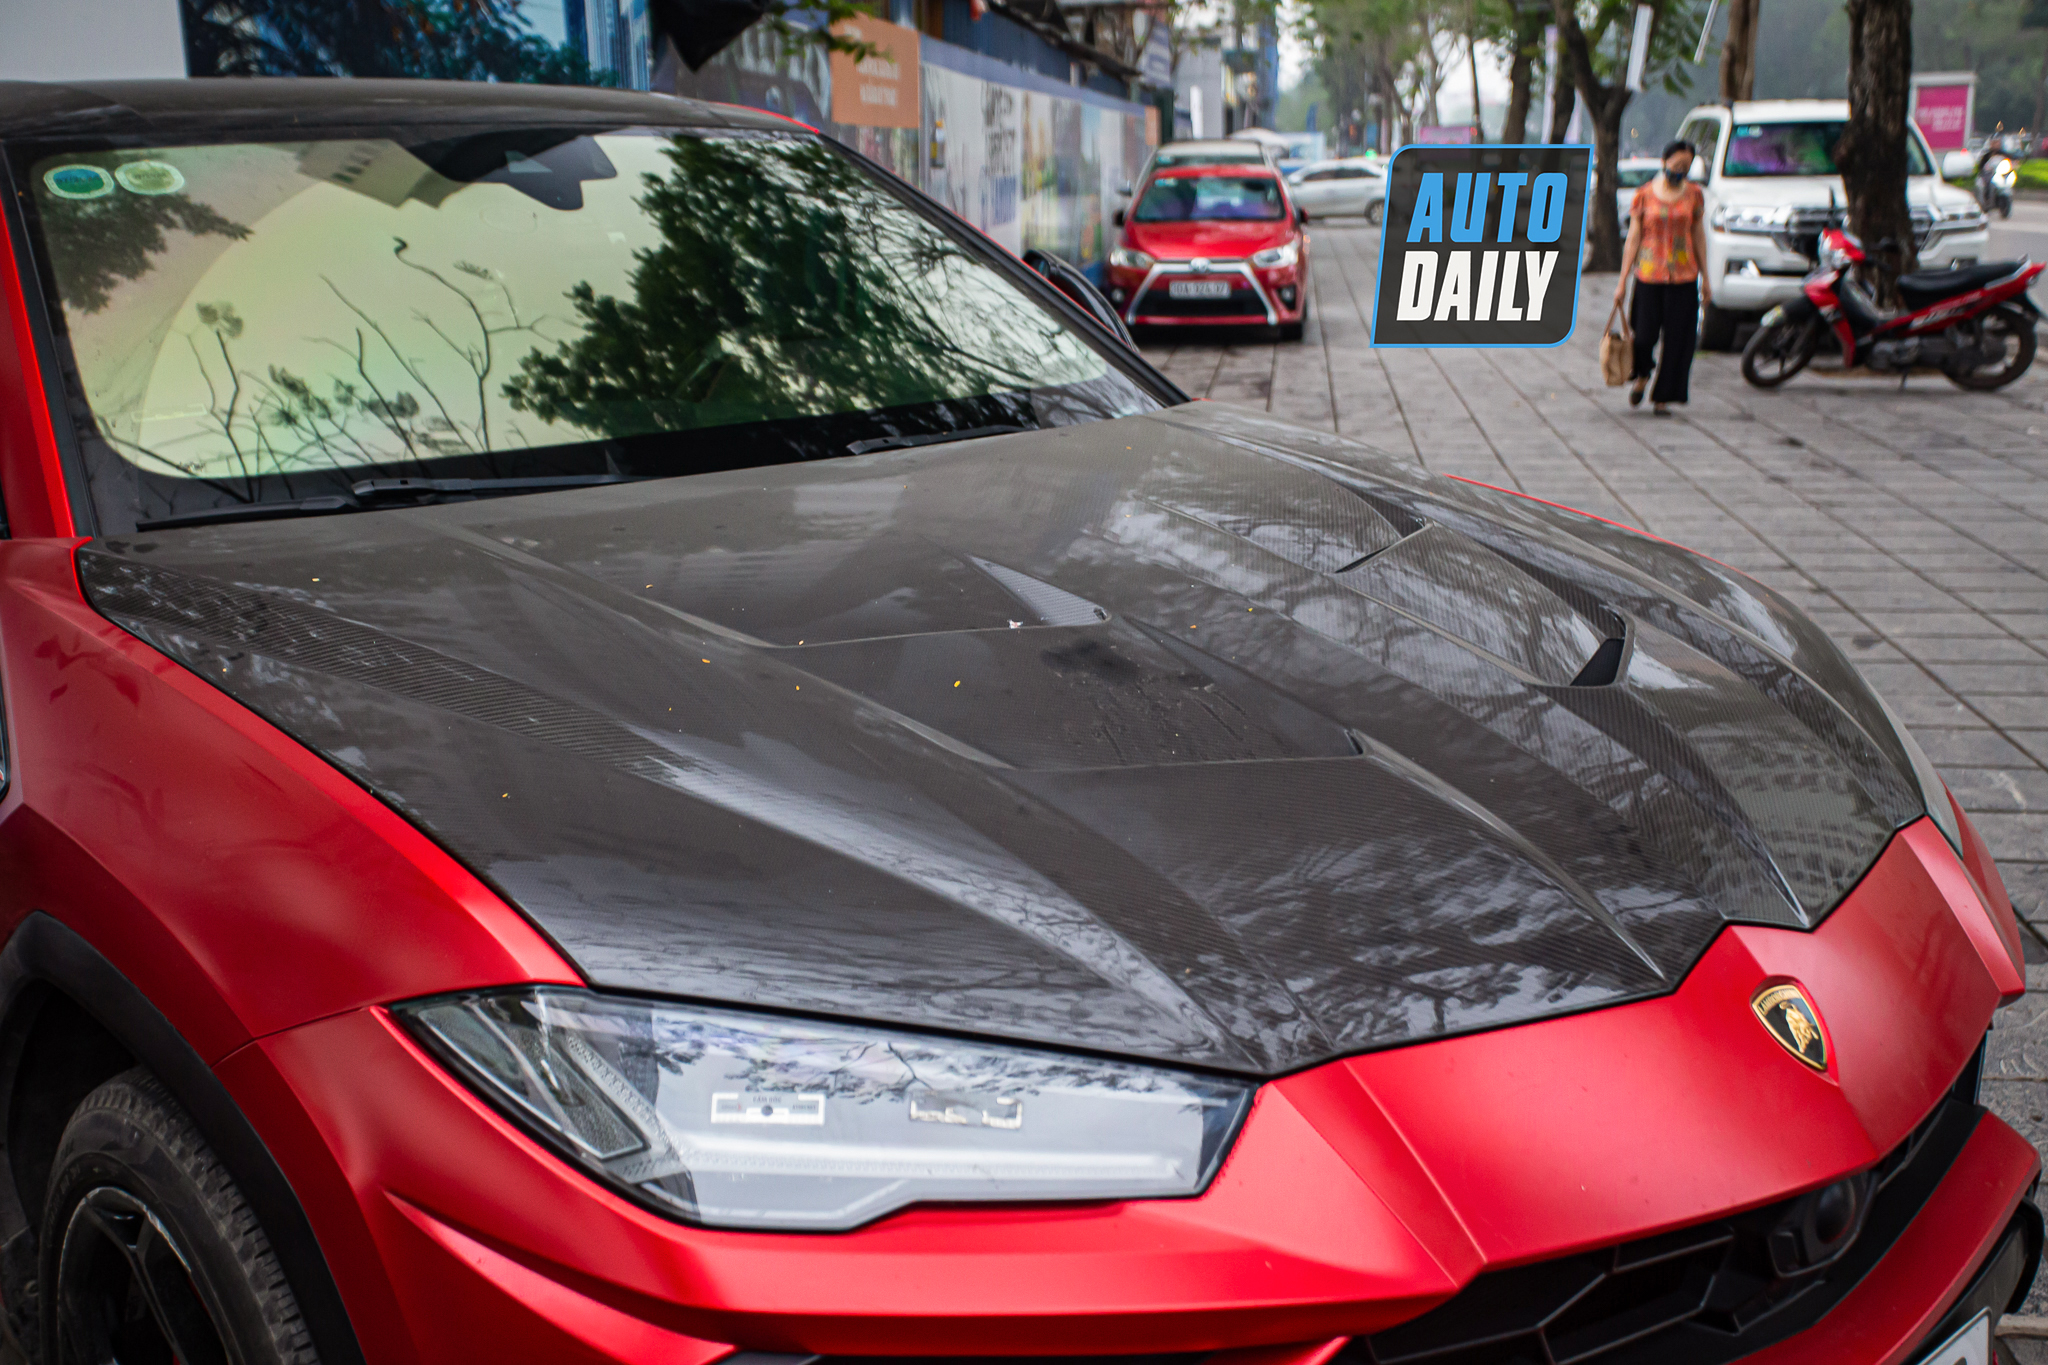 Siêu SUV Lamborghini Urus từng của Minh “Nhựa” ra sao sau 6 năm về Việt Nam? lamborghini-urus-minh-nhua-autodaily-6.JPG